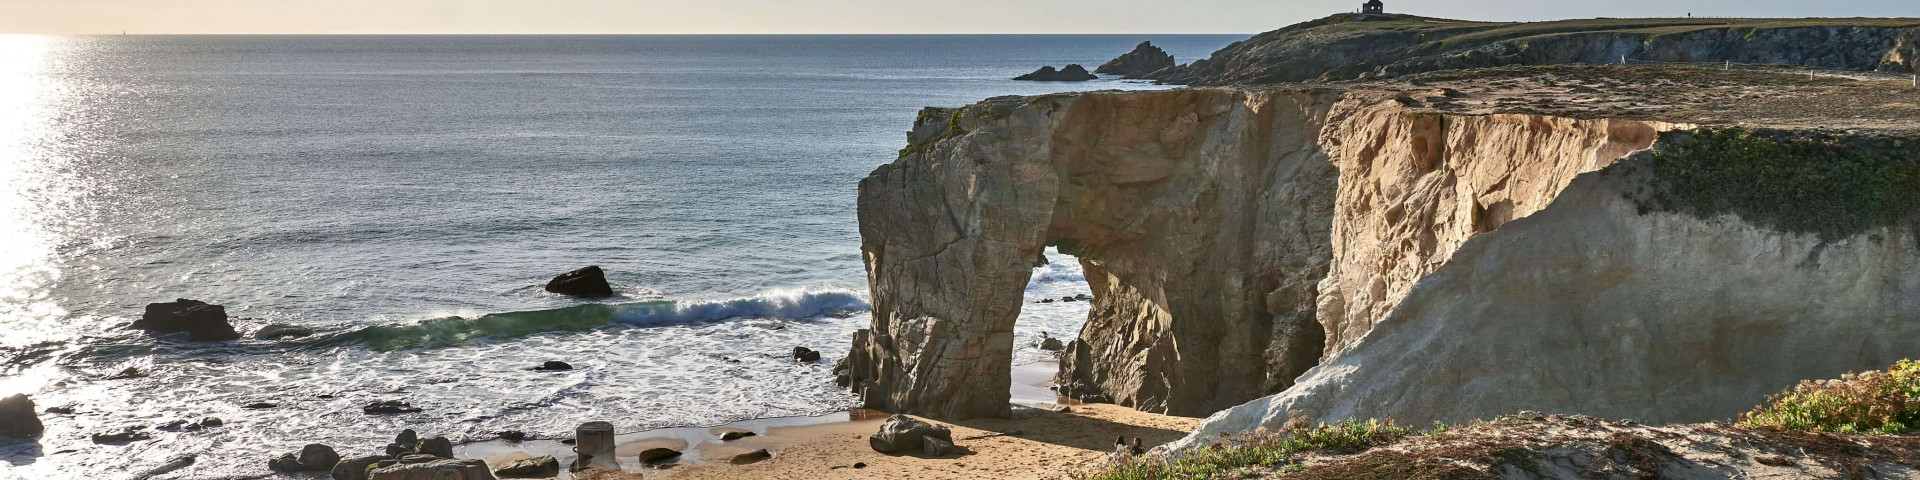 Arche De Port Blanc Roche Percée on Wild West Coast of Quiberon Peninsula, Brittany France